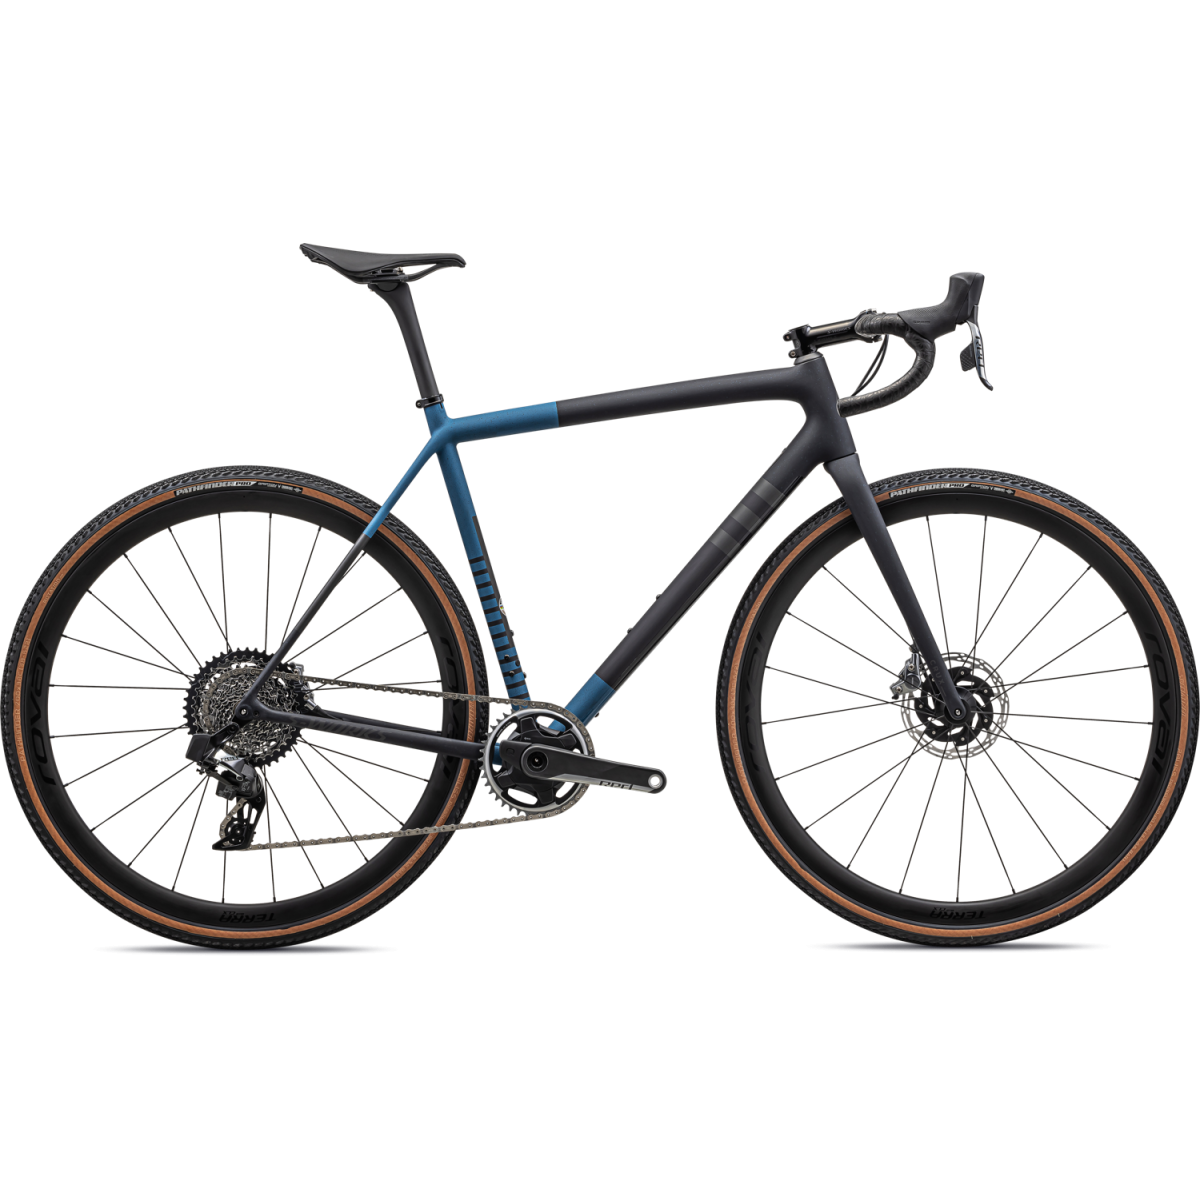 S-Works Crux Gravel dviratis / Satin Metallic Dark Navy - Mystic Blue